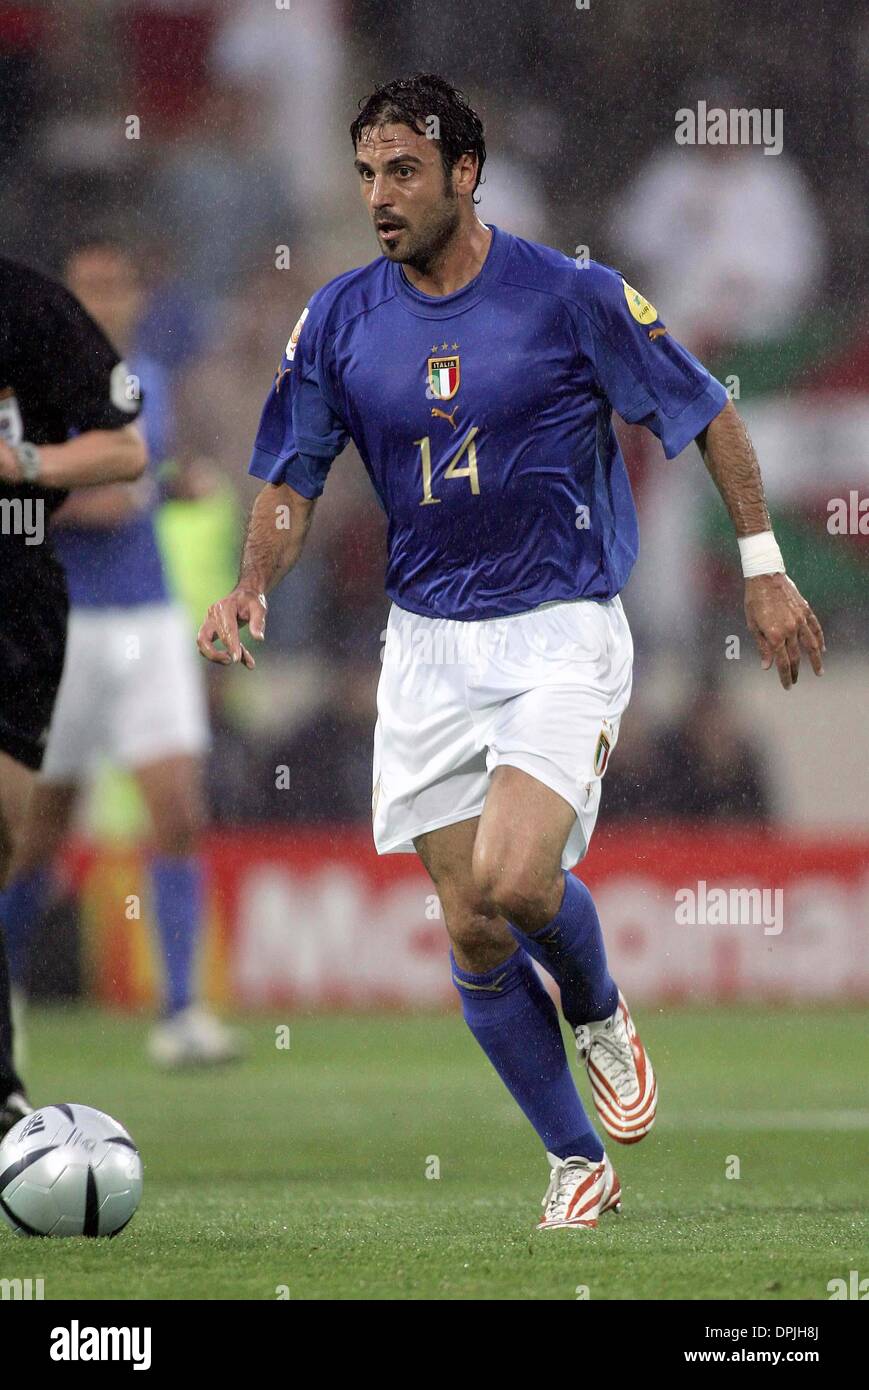 STEFANO FIORE.ITALY & LAZIO FC.ITALY V BULGARIA EURO 2004.D. AFONSO HENRIQUES STADIUM, GUIMARAES, PORTUGAL.22/06/2004.DIG24923.K47872.WORLD CUP PREVIEW 2006 Stock Photo